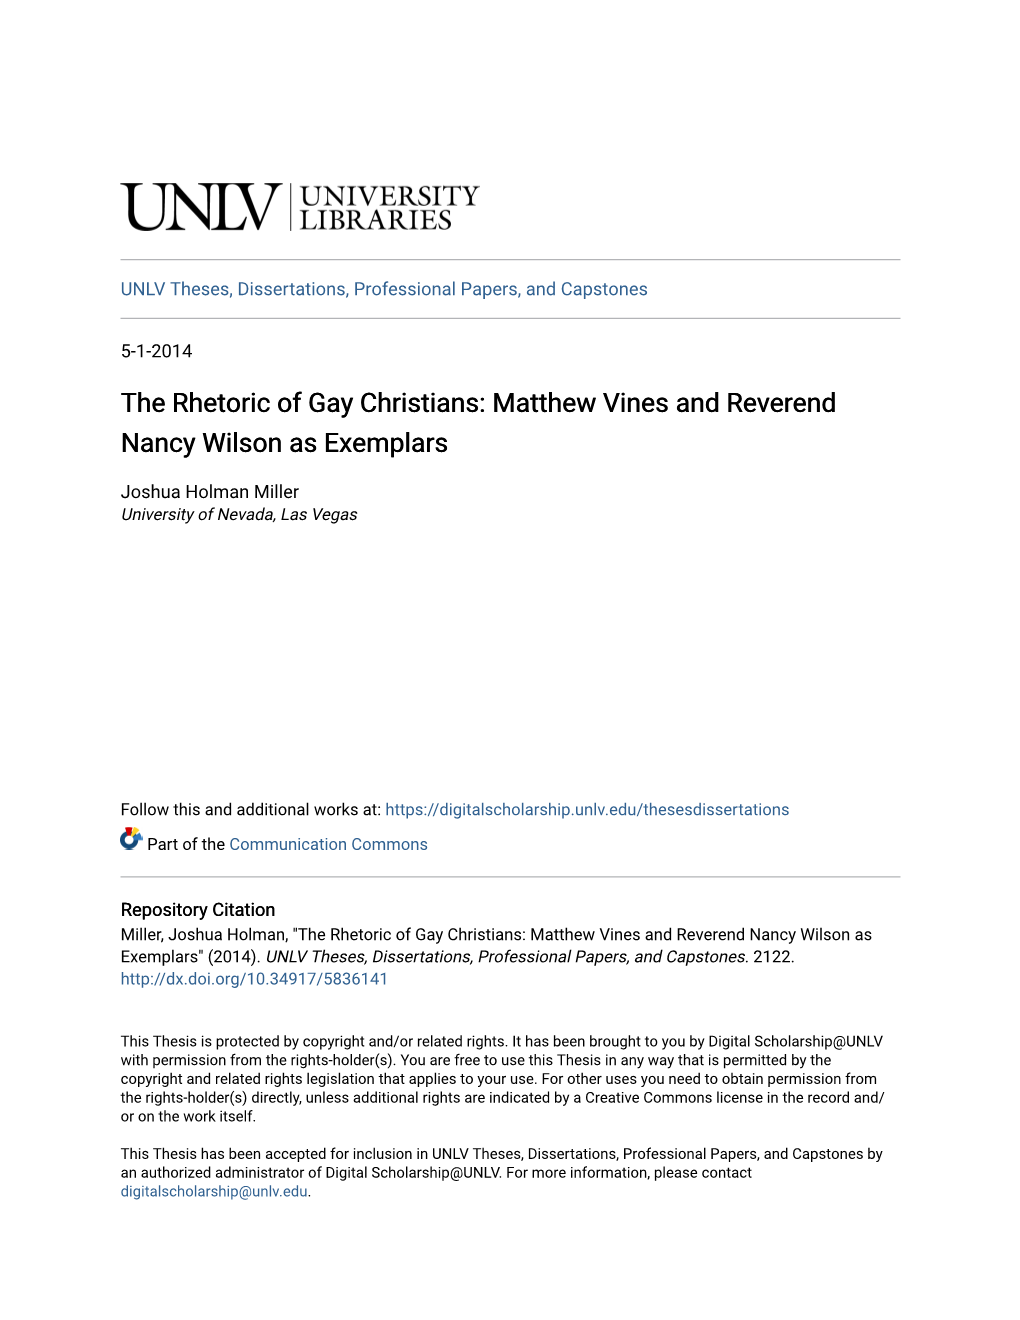 The Rhetoric of Gay Christians: Matthew Vines and Reverend Nancy Wilson As Exemplars